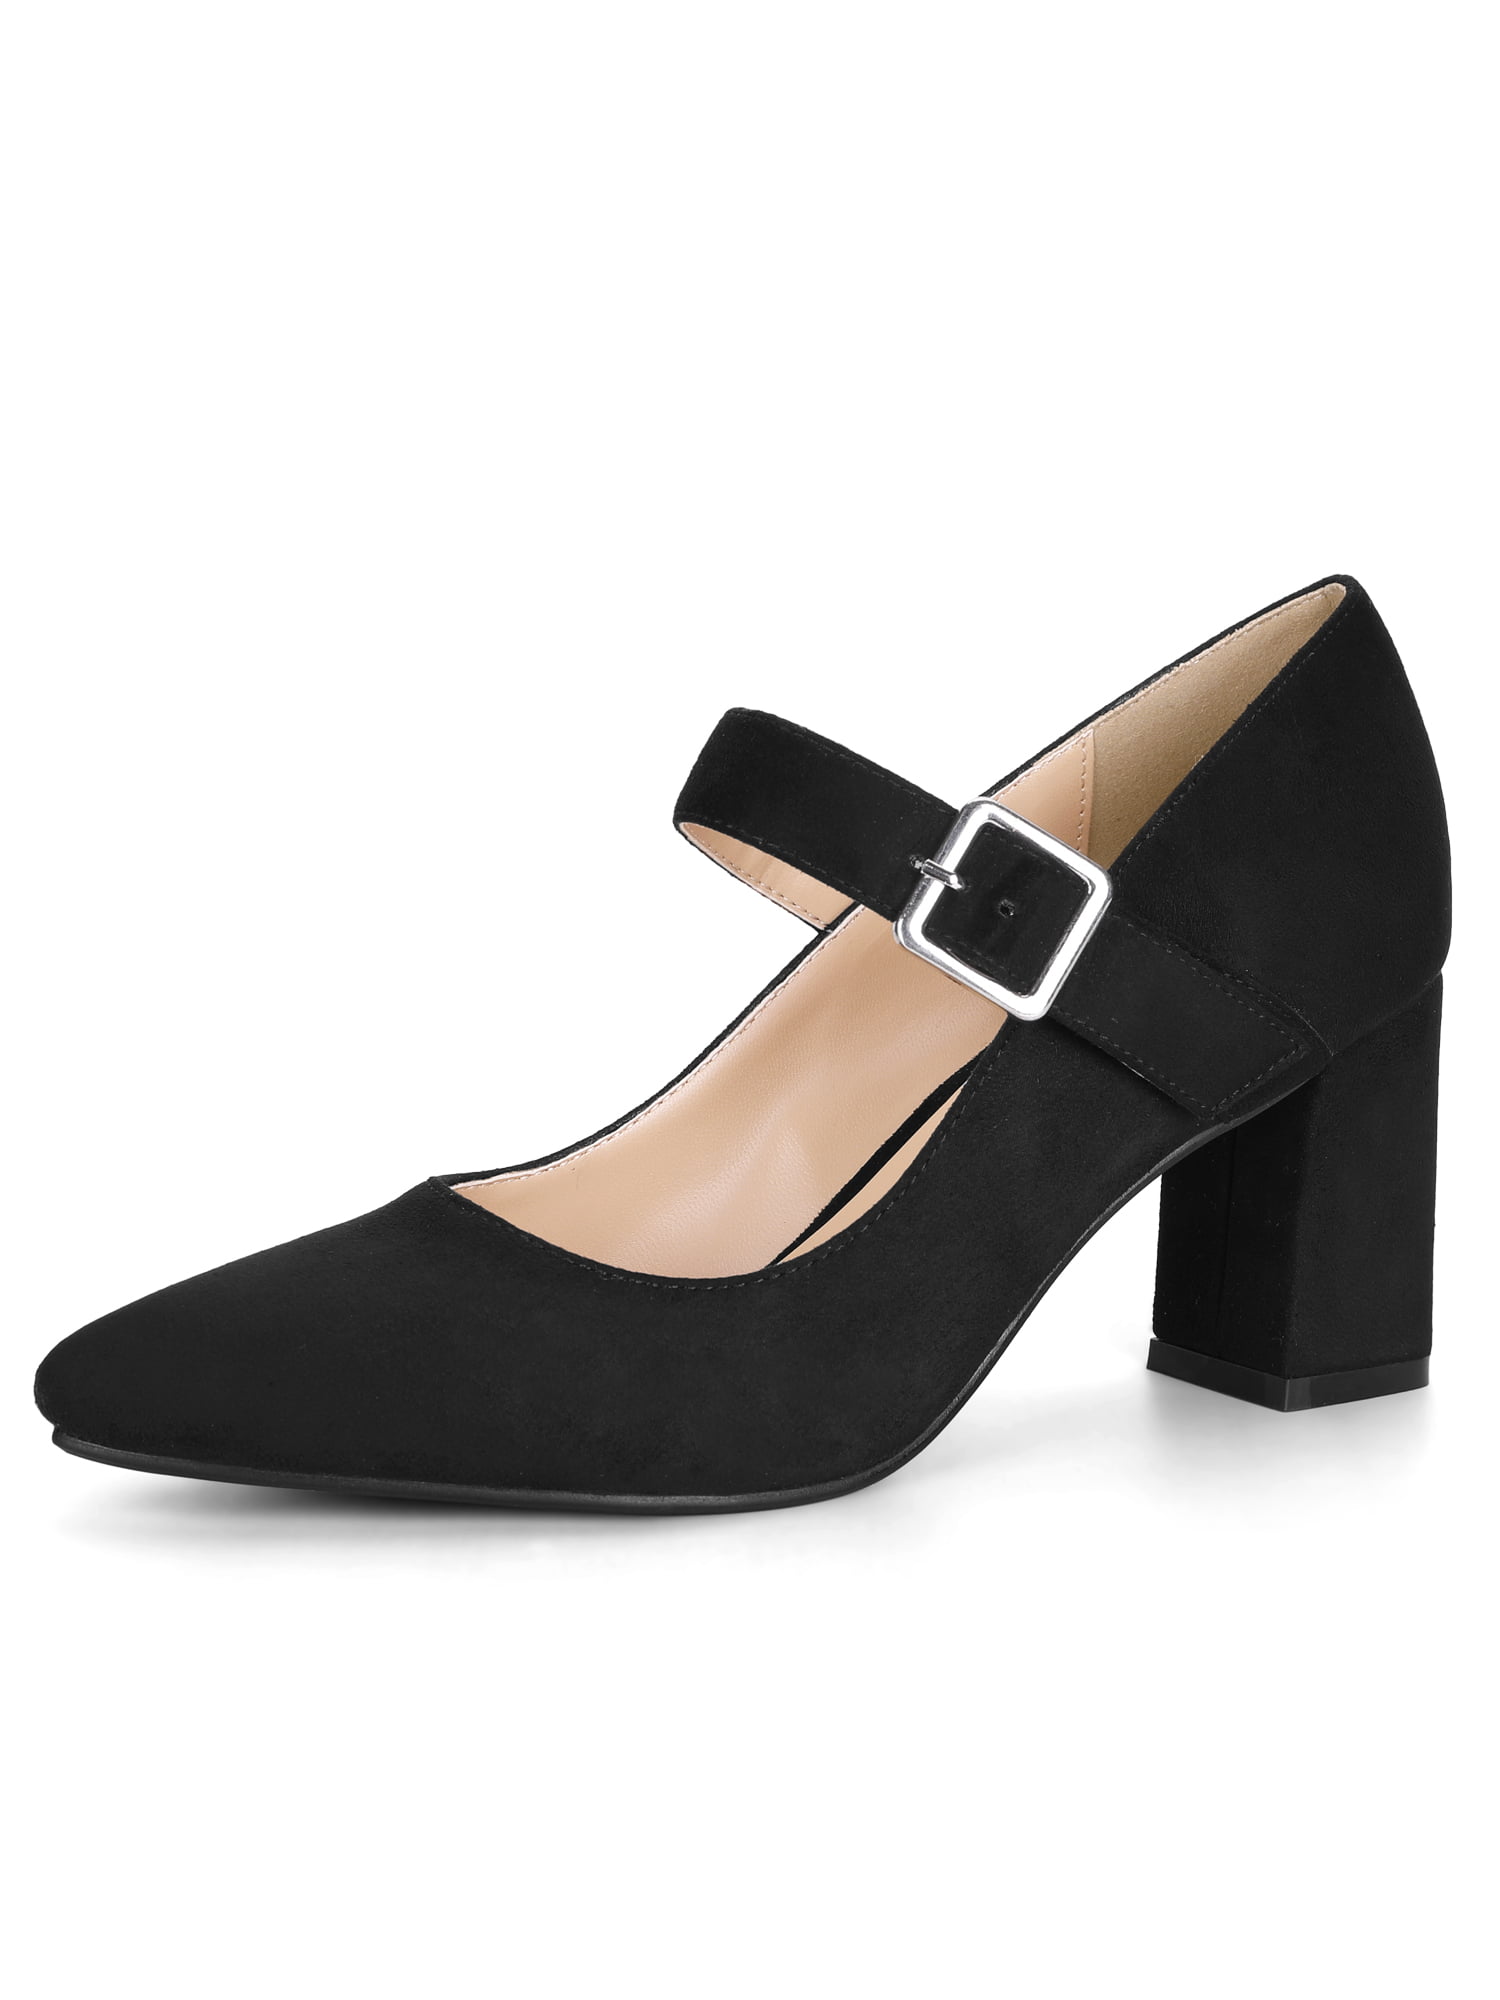 black mary jane pumps chunky heel